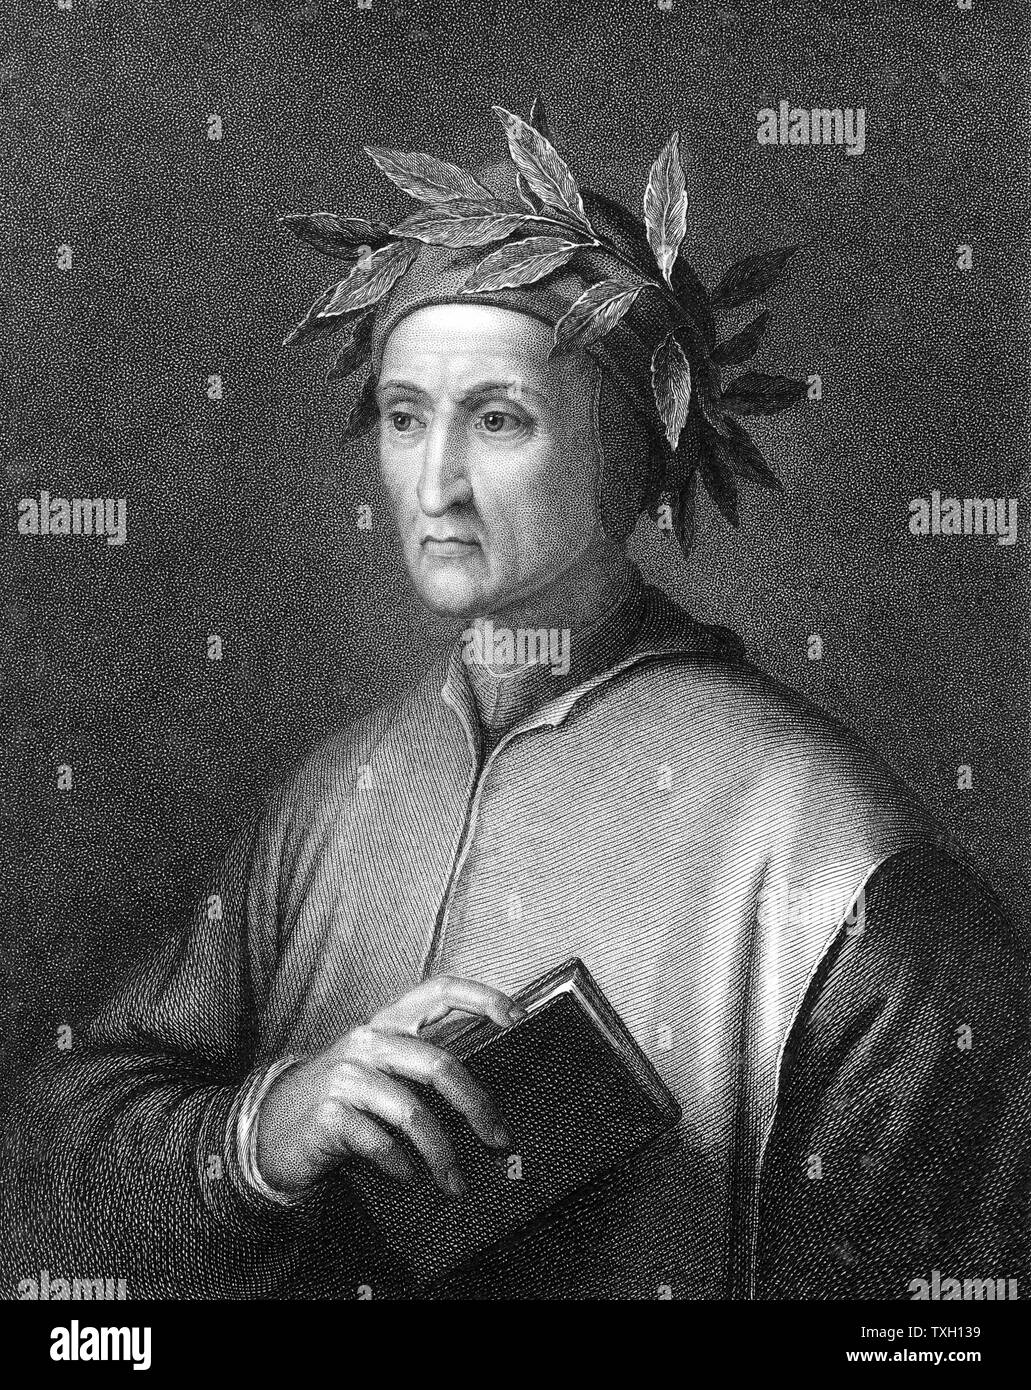 Dante Alighieri (1265-1321)  Italian poet. Portrait engraving Stock Photo